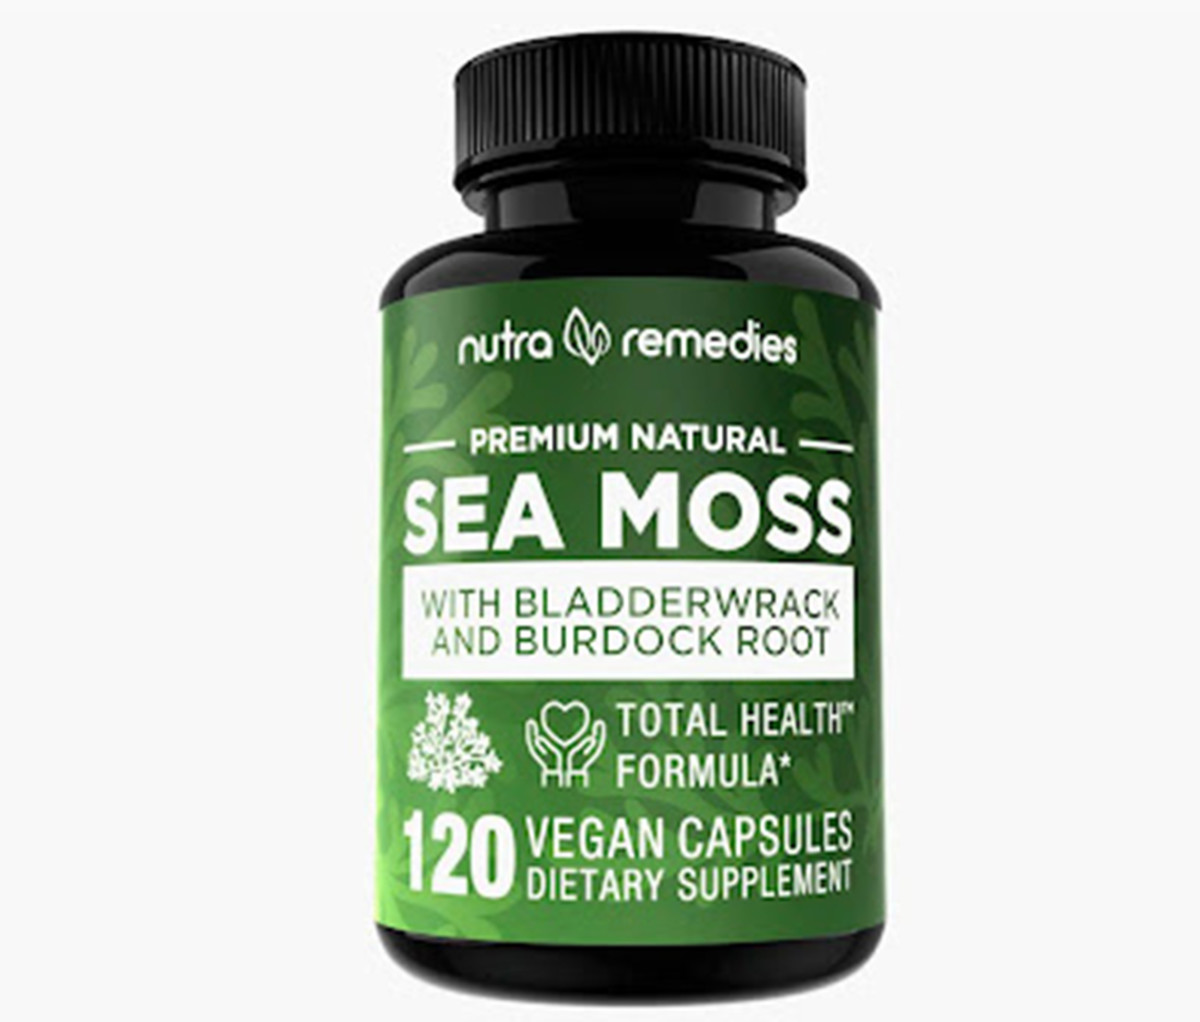 Nutro Sea Moss